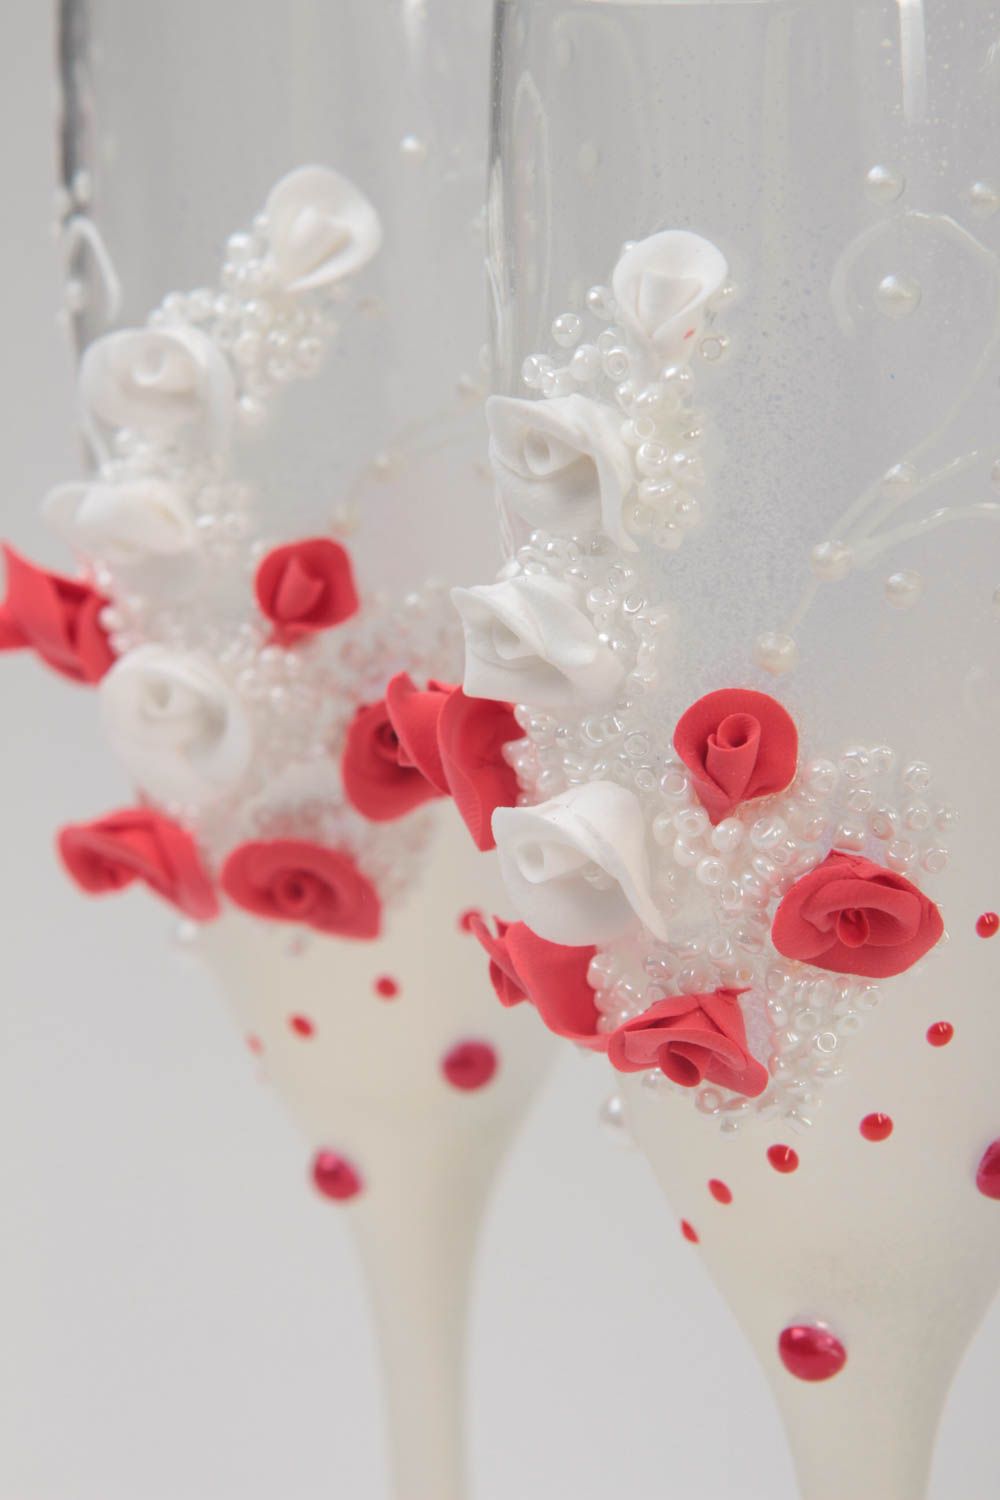 Handmade wedding accessories festive wedding ware white glasses with flowers photo 3